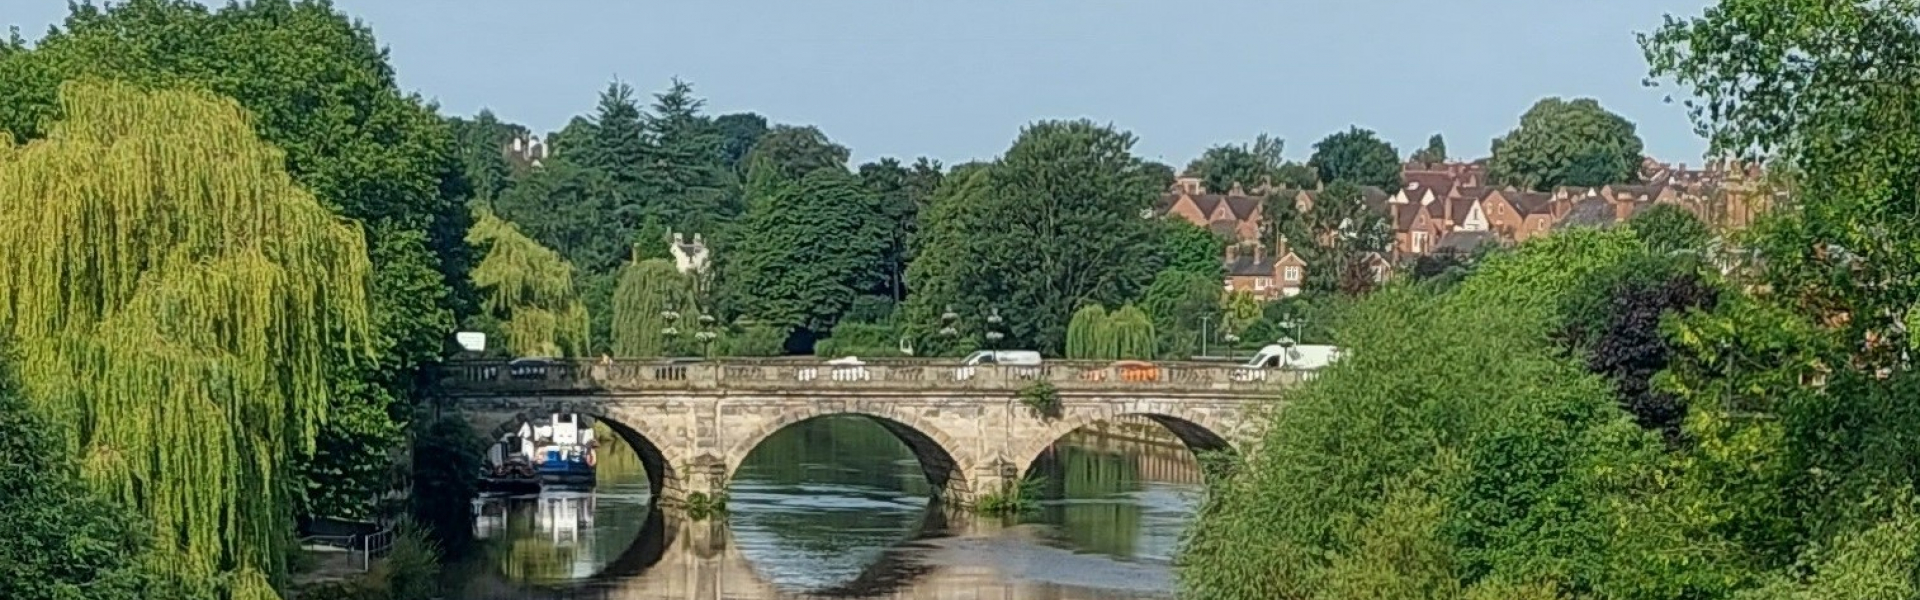 Welsh Bridge Shrewsbury